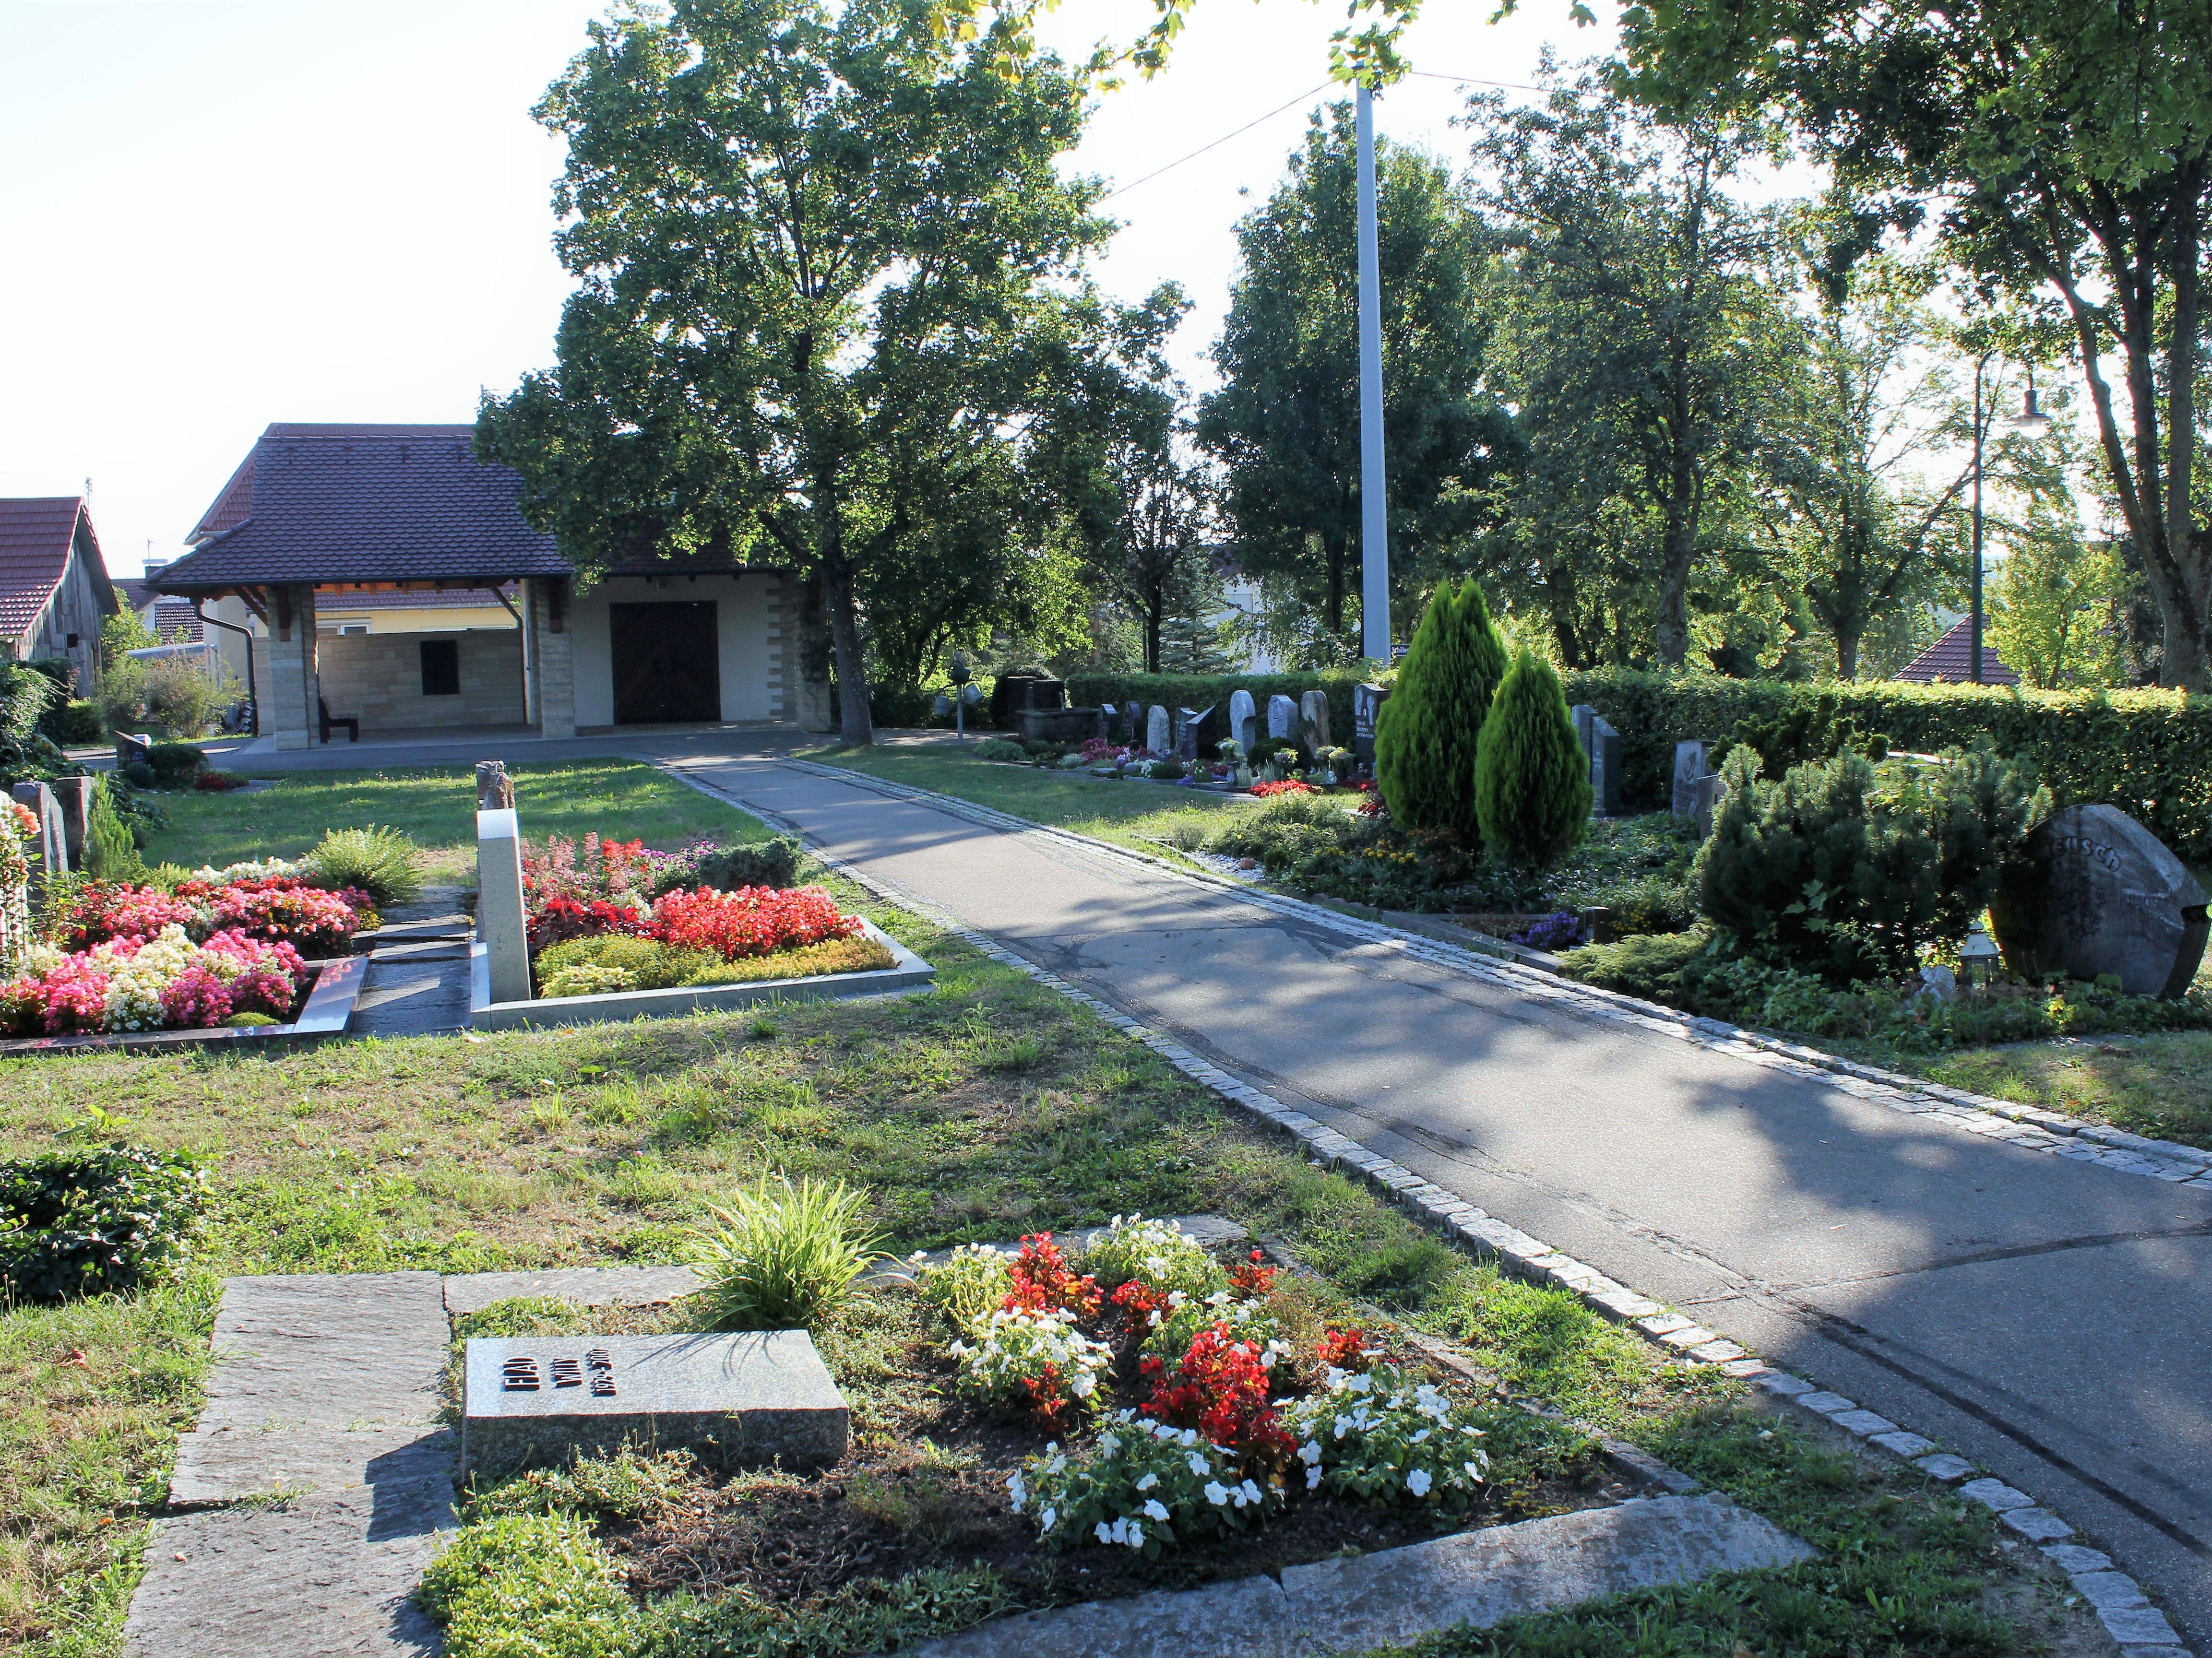                                                     Friedhof Kleinbettlingen                                    